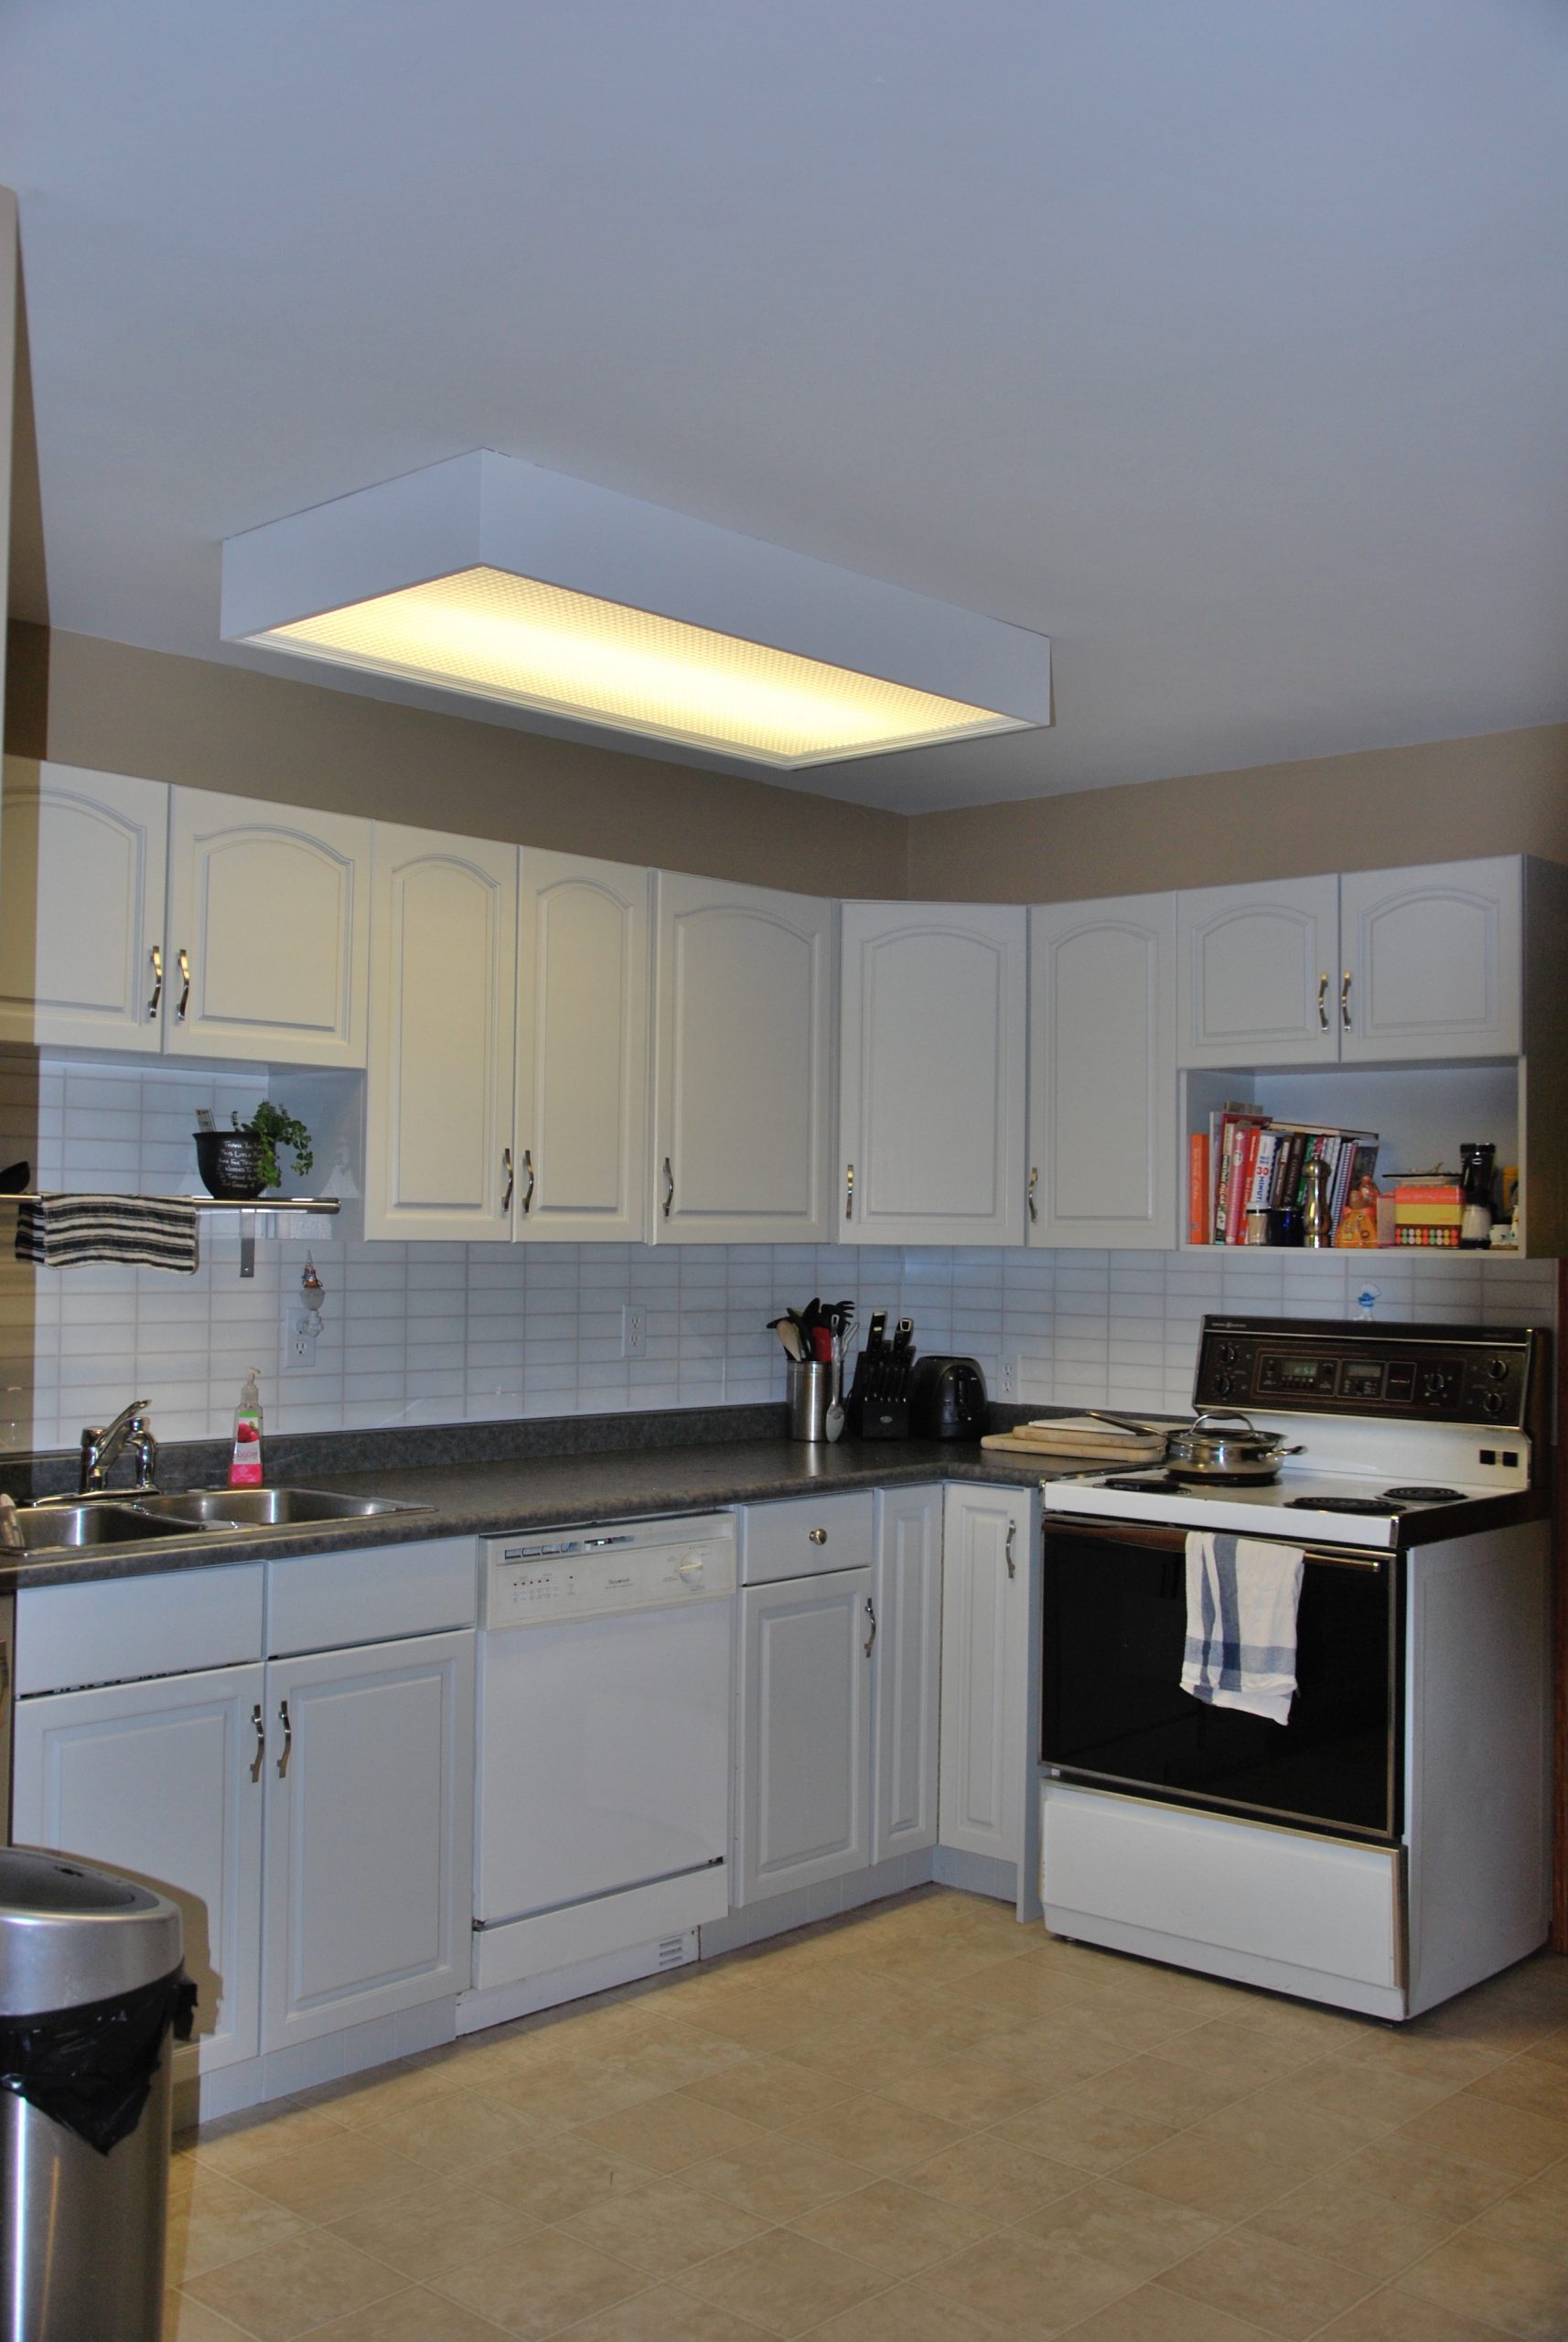 kitchen renovations white walls overhead light